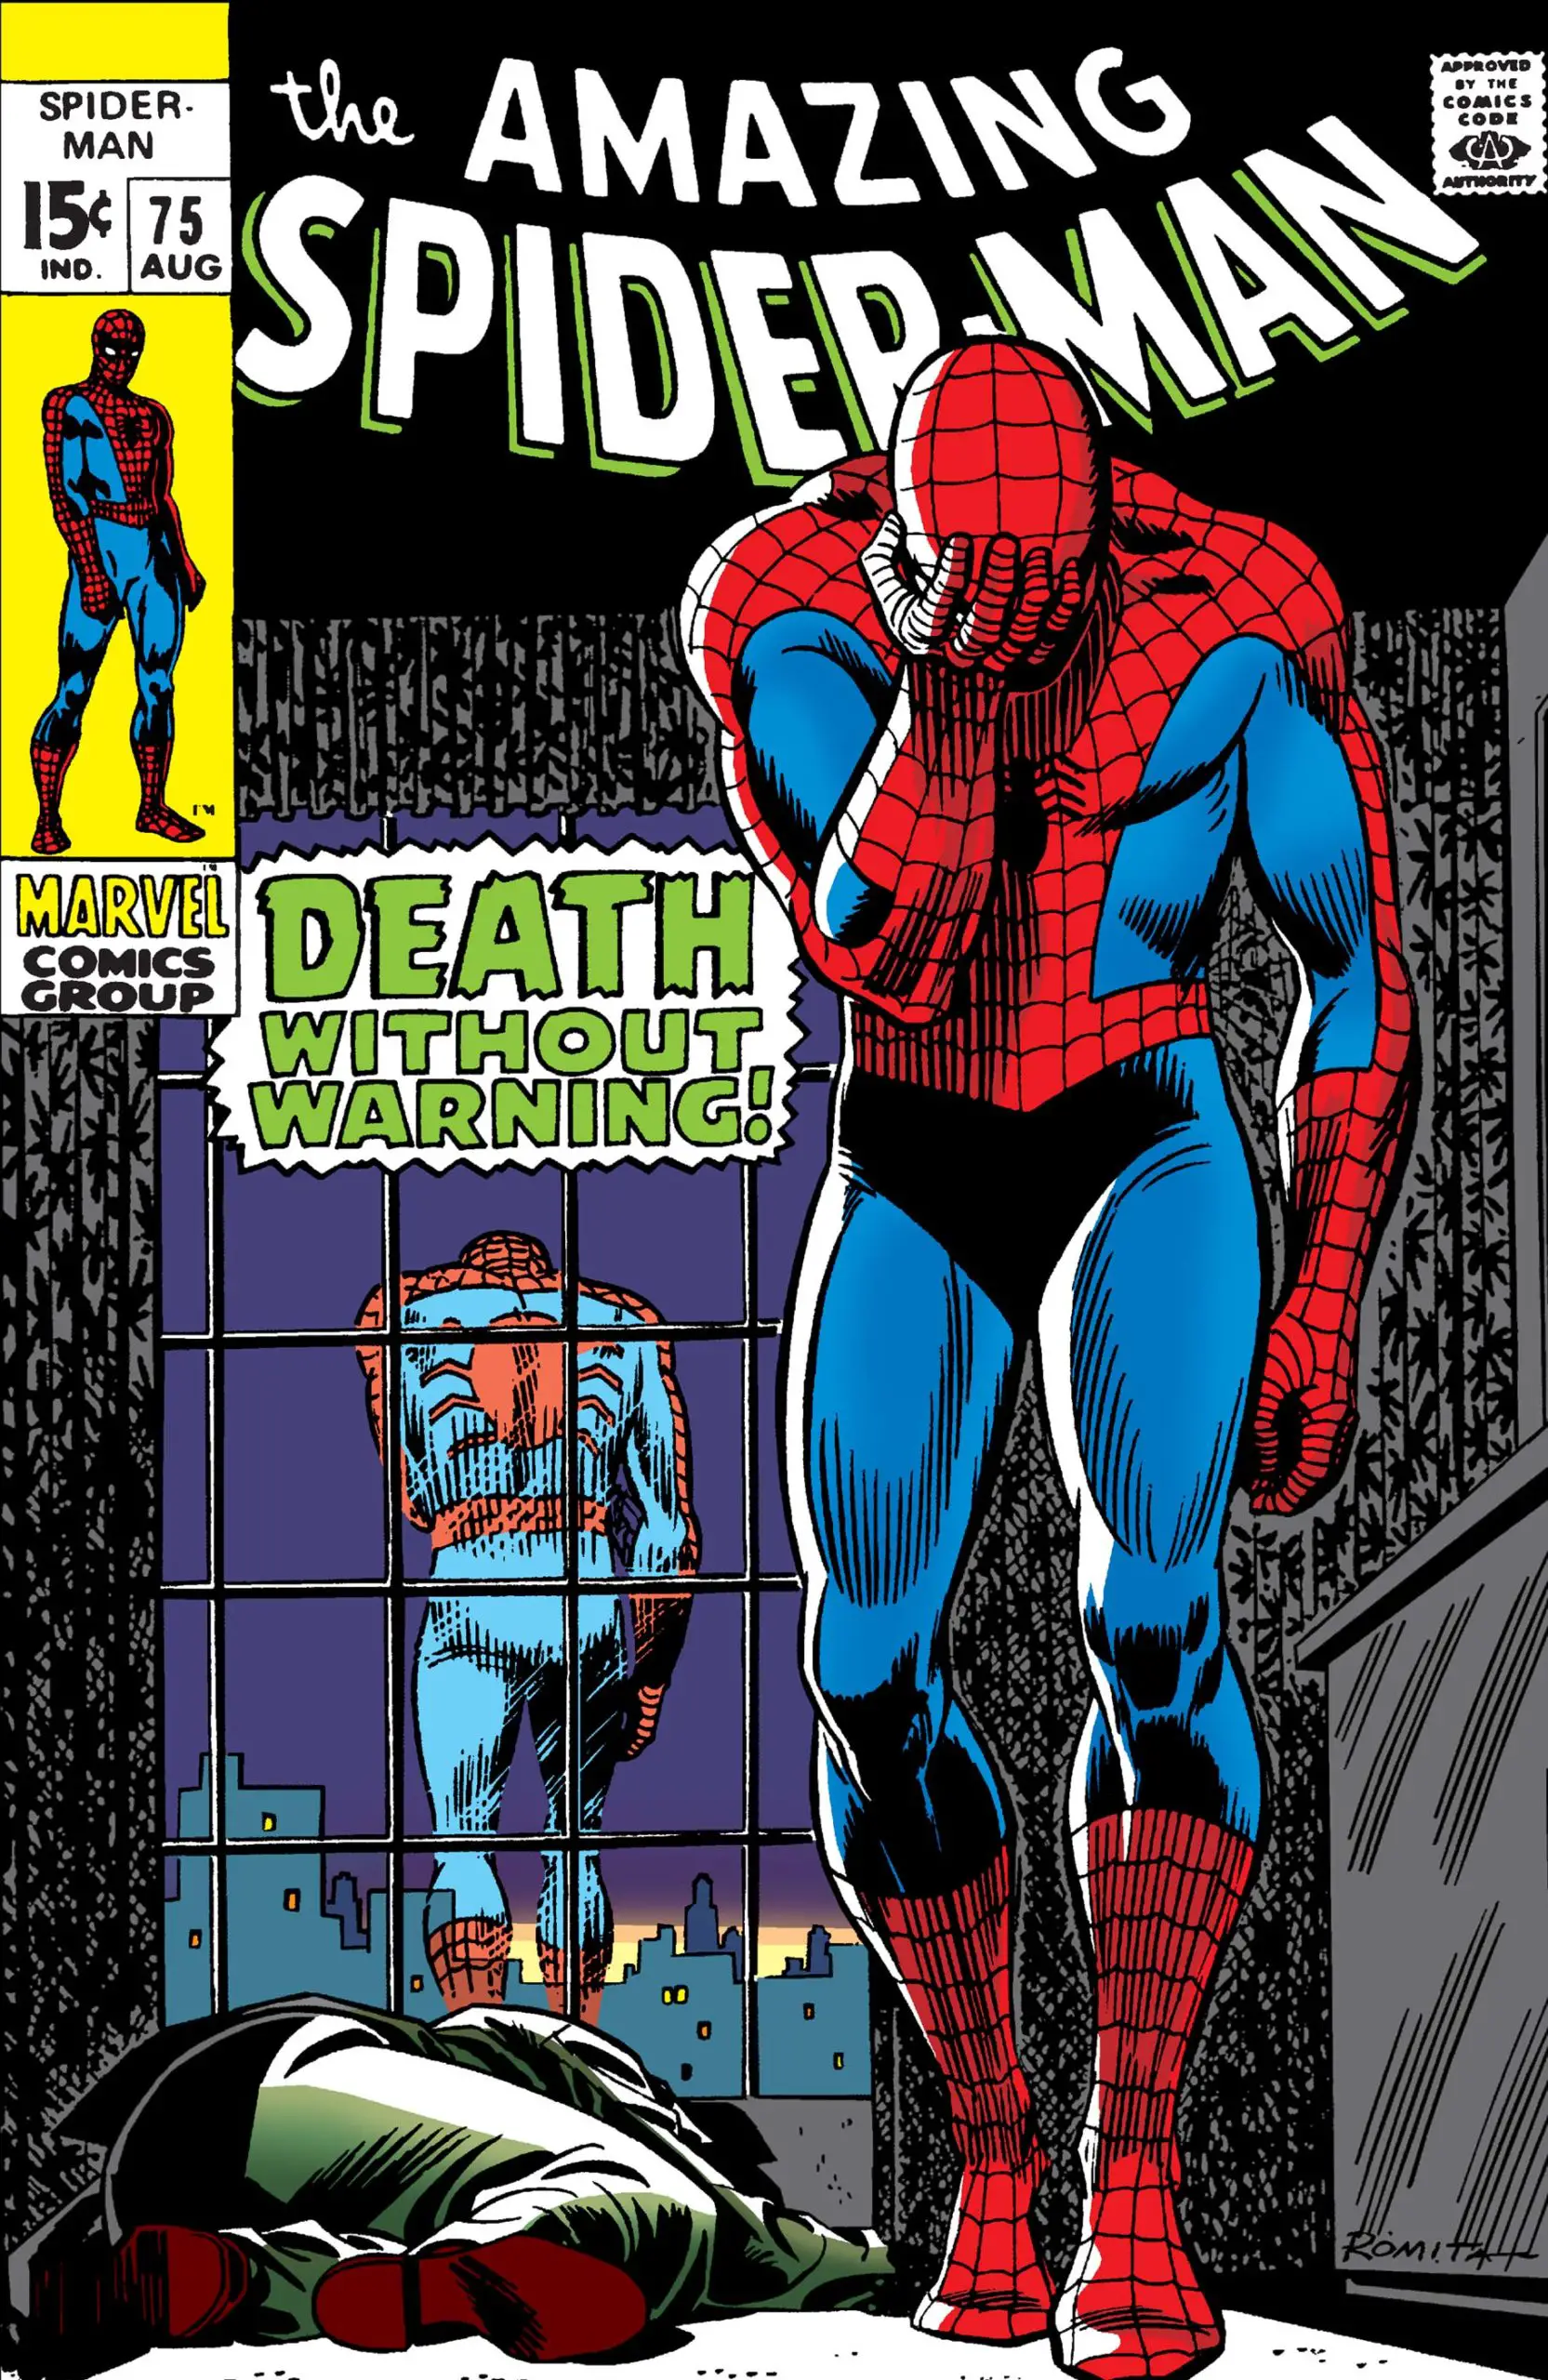 The Amazing Spider-Man #75 1963